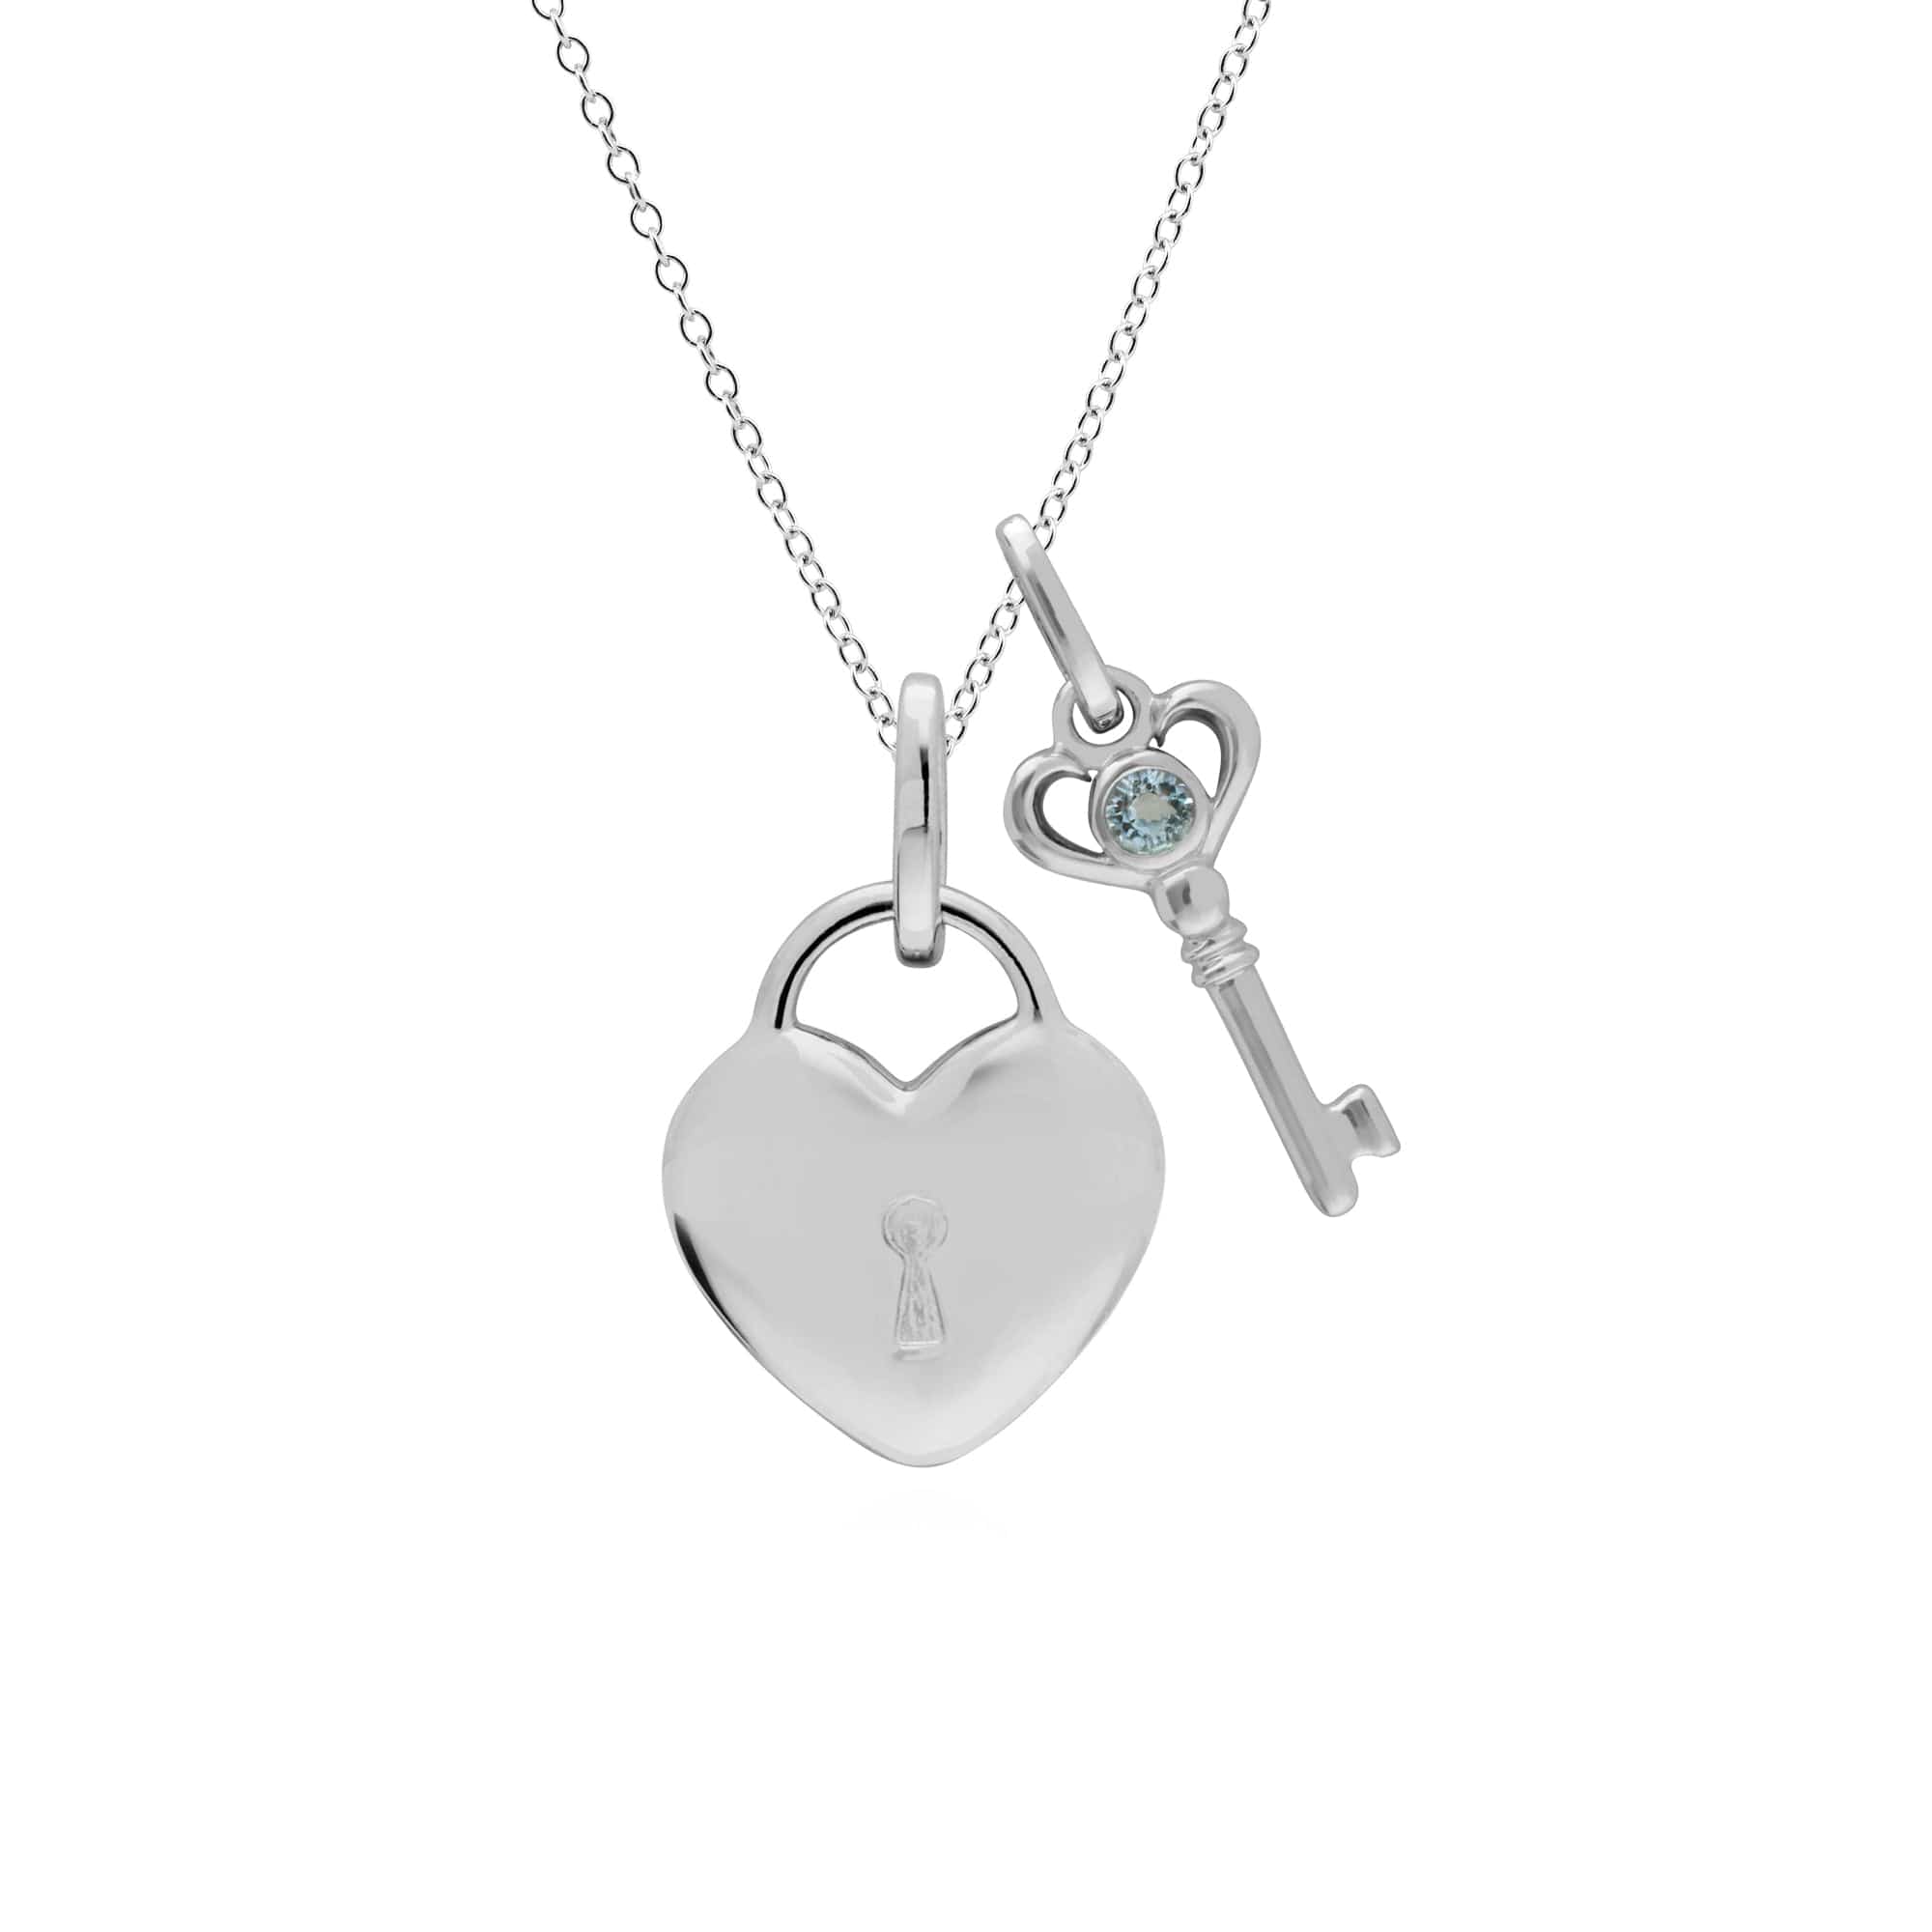 270P026408925-270P027001925 Classic Heart Lock Pendant & Aquamarine Key Charm in 925 Sterling Silver 1